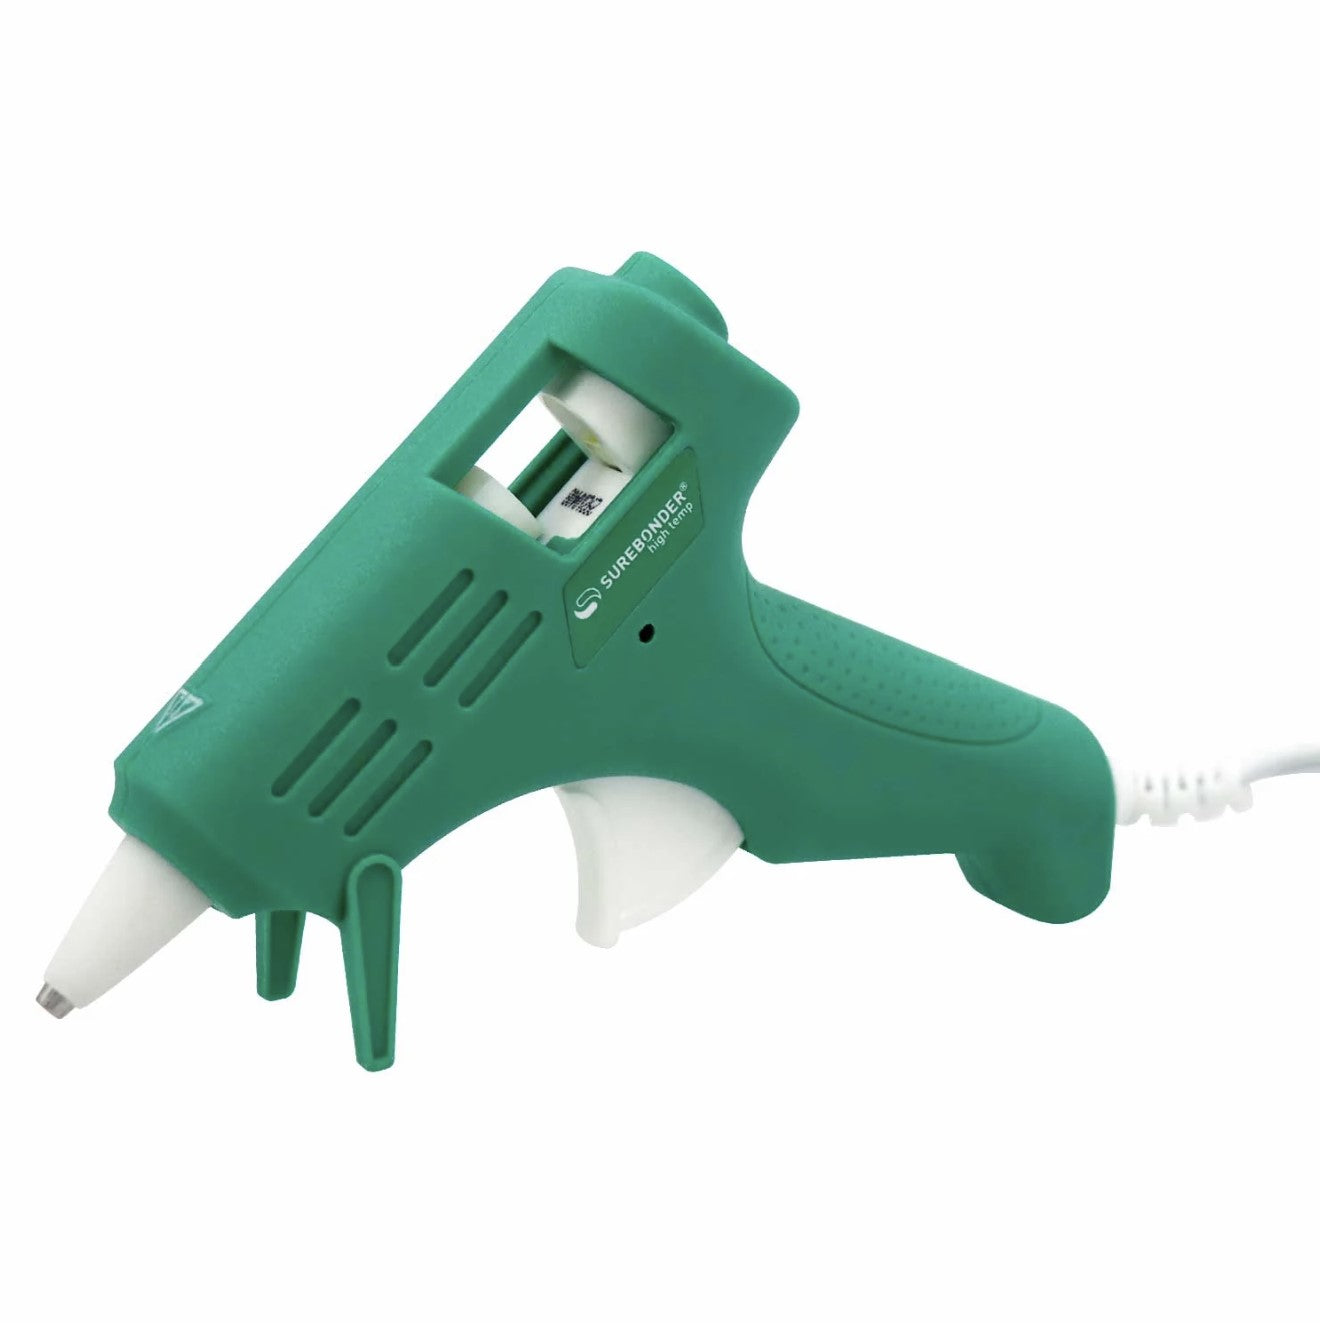 Mini Size High Temp Glue Gun, 10 Watt (Ref. GM-160SAG), Sage Green Colored Essentials Series by Surebonder®